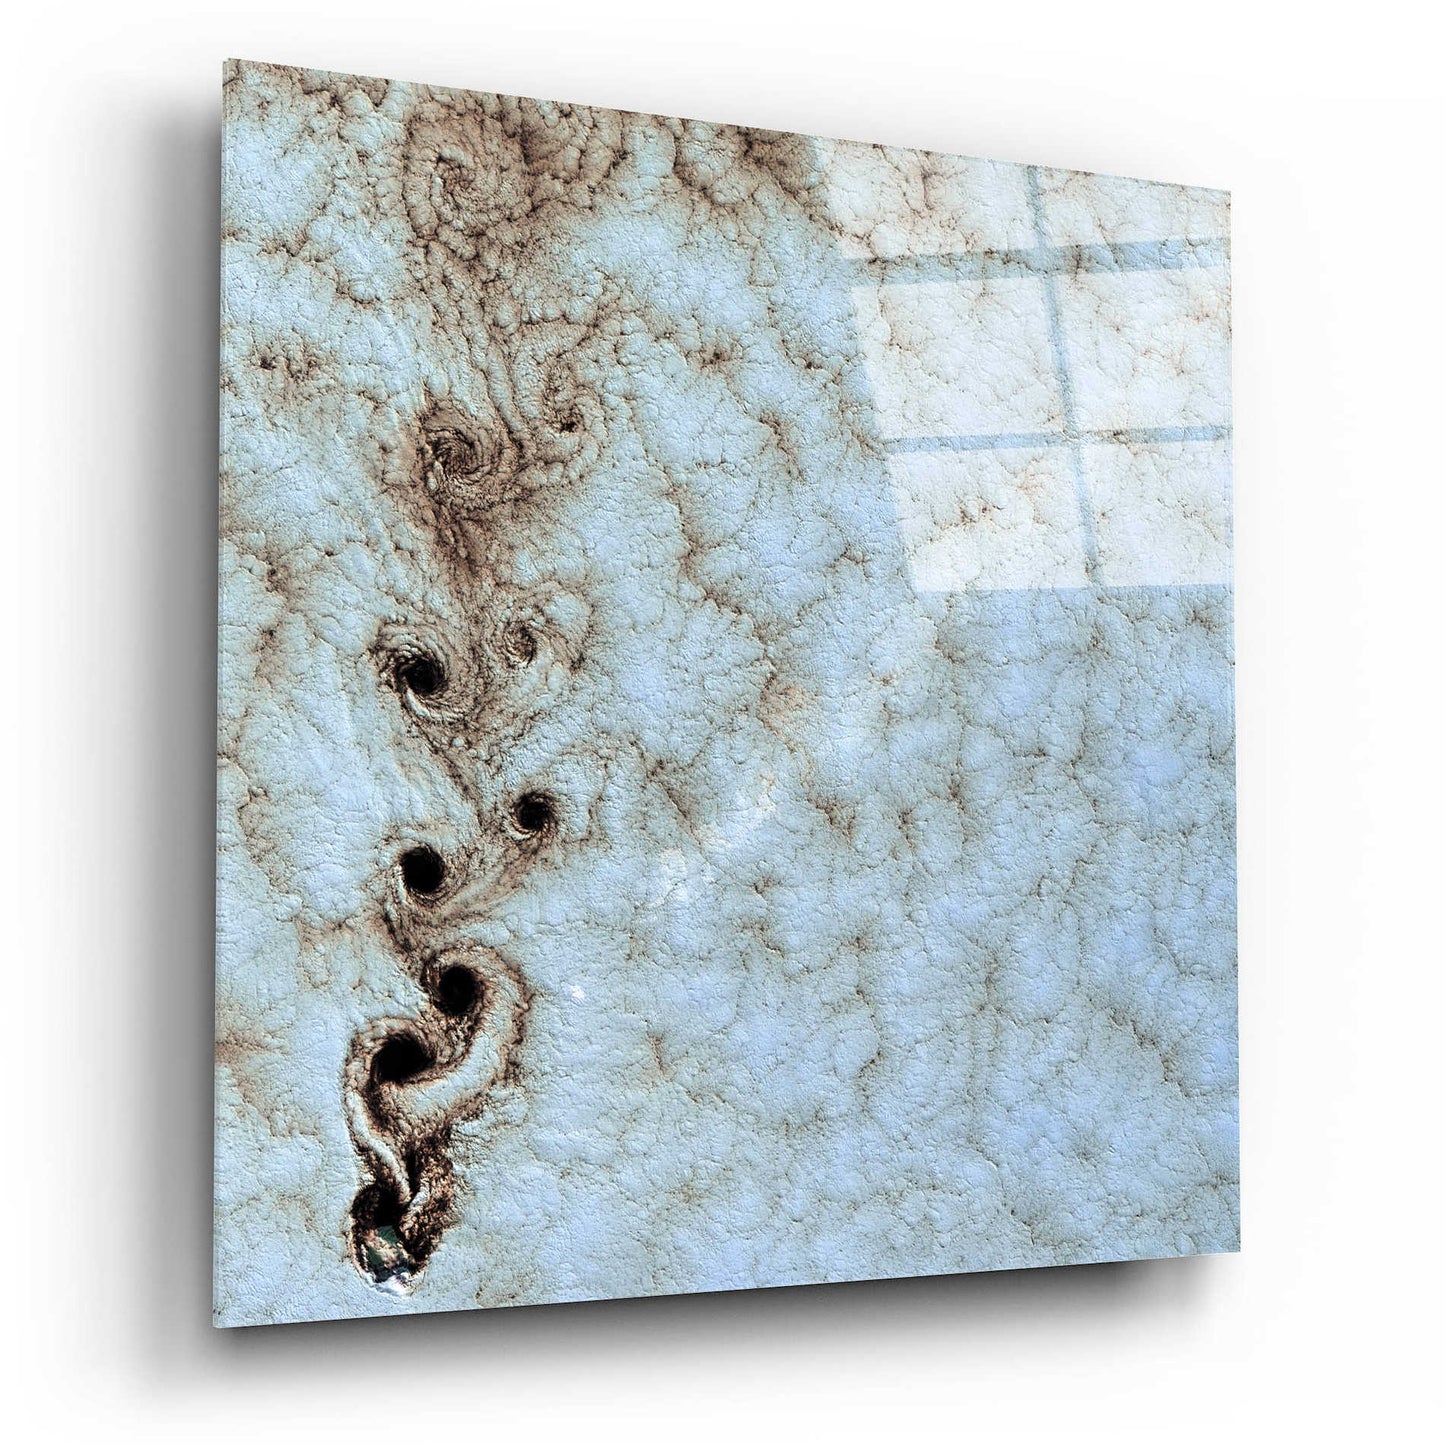 Epic Art 'Earth as Art: Karman Vortices' Acrylic Glass Wall Art,12x12